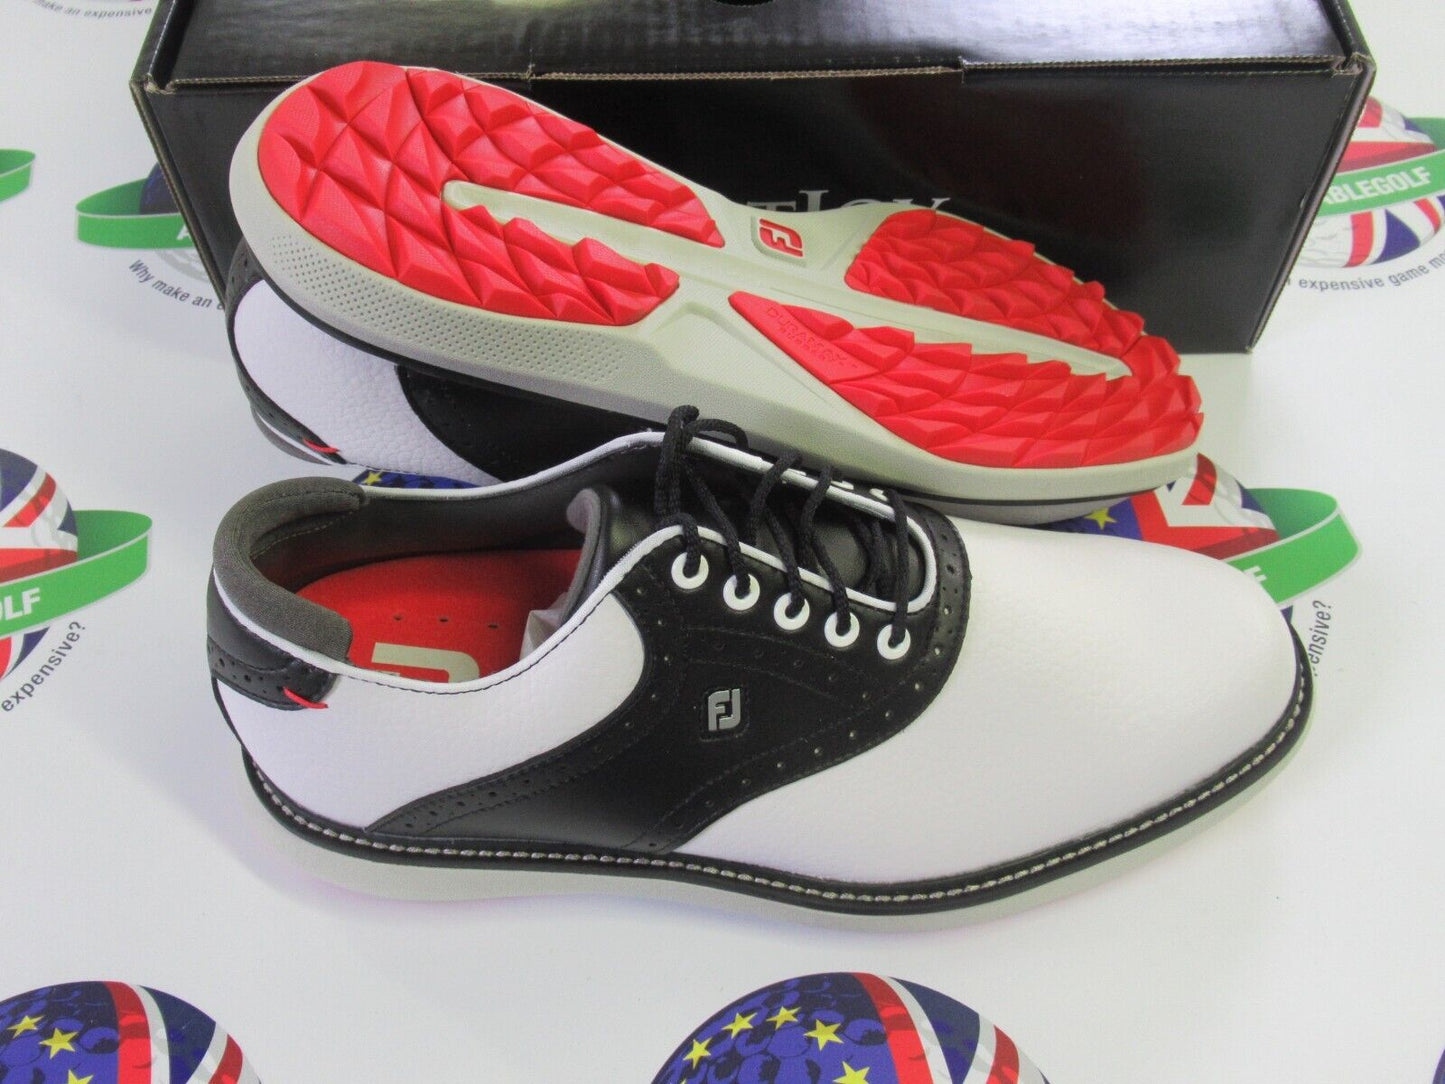 footjoy traditions waterproof golf shoes 57924k white/black uk size 9.5 medium